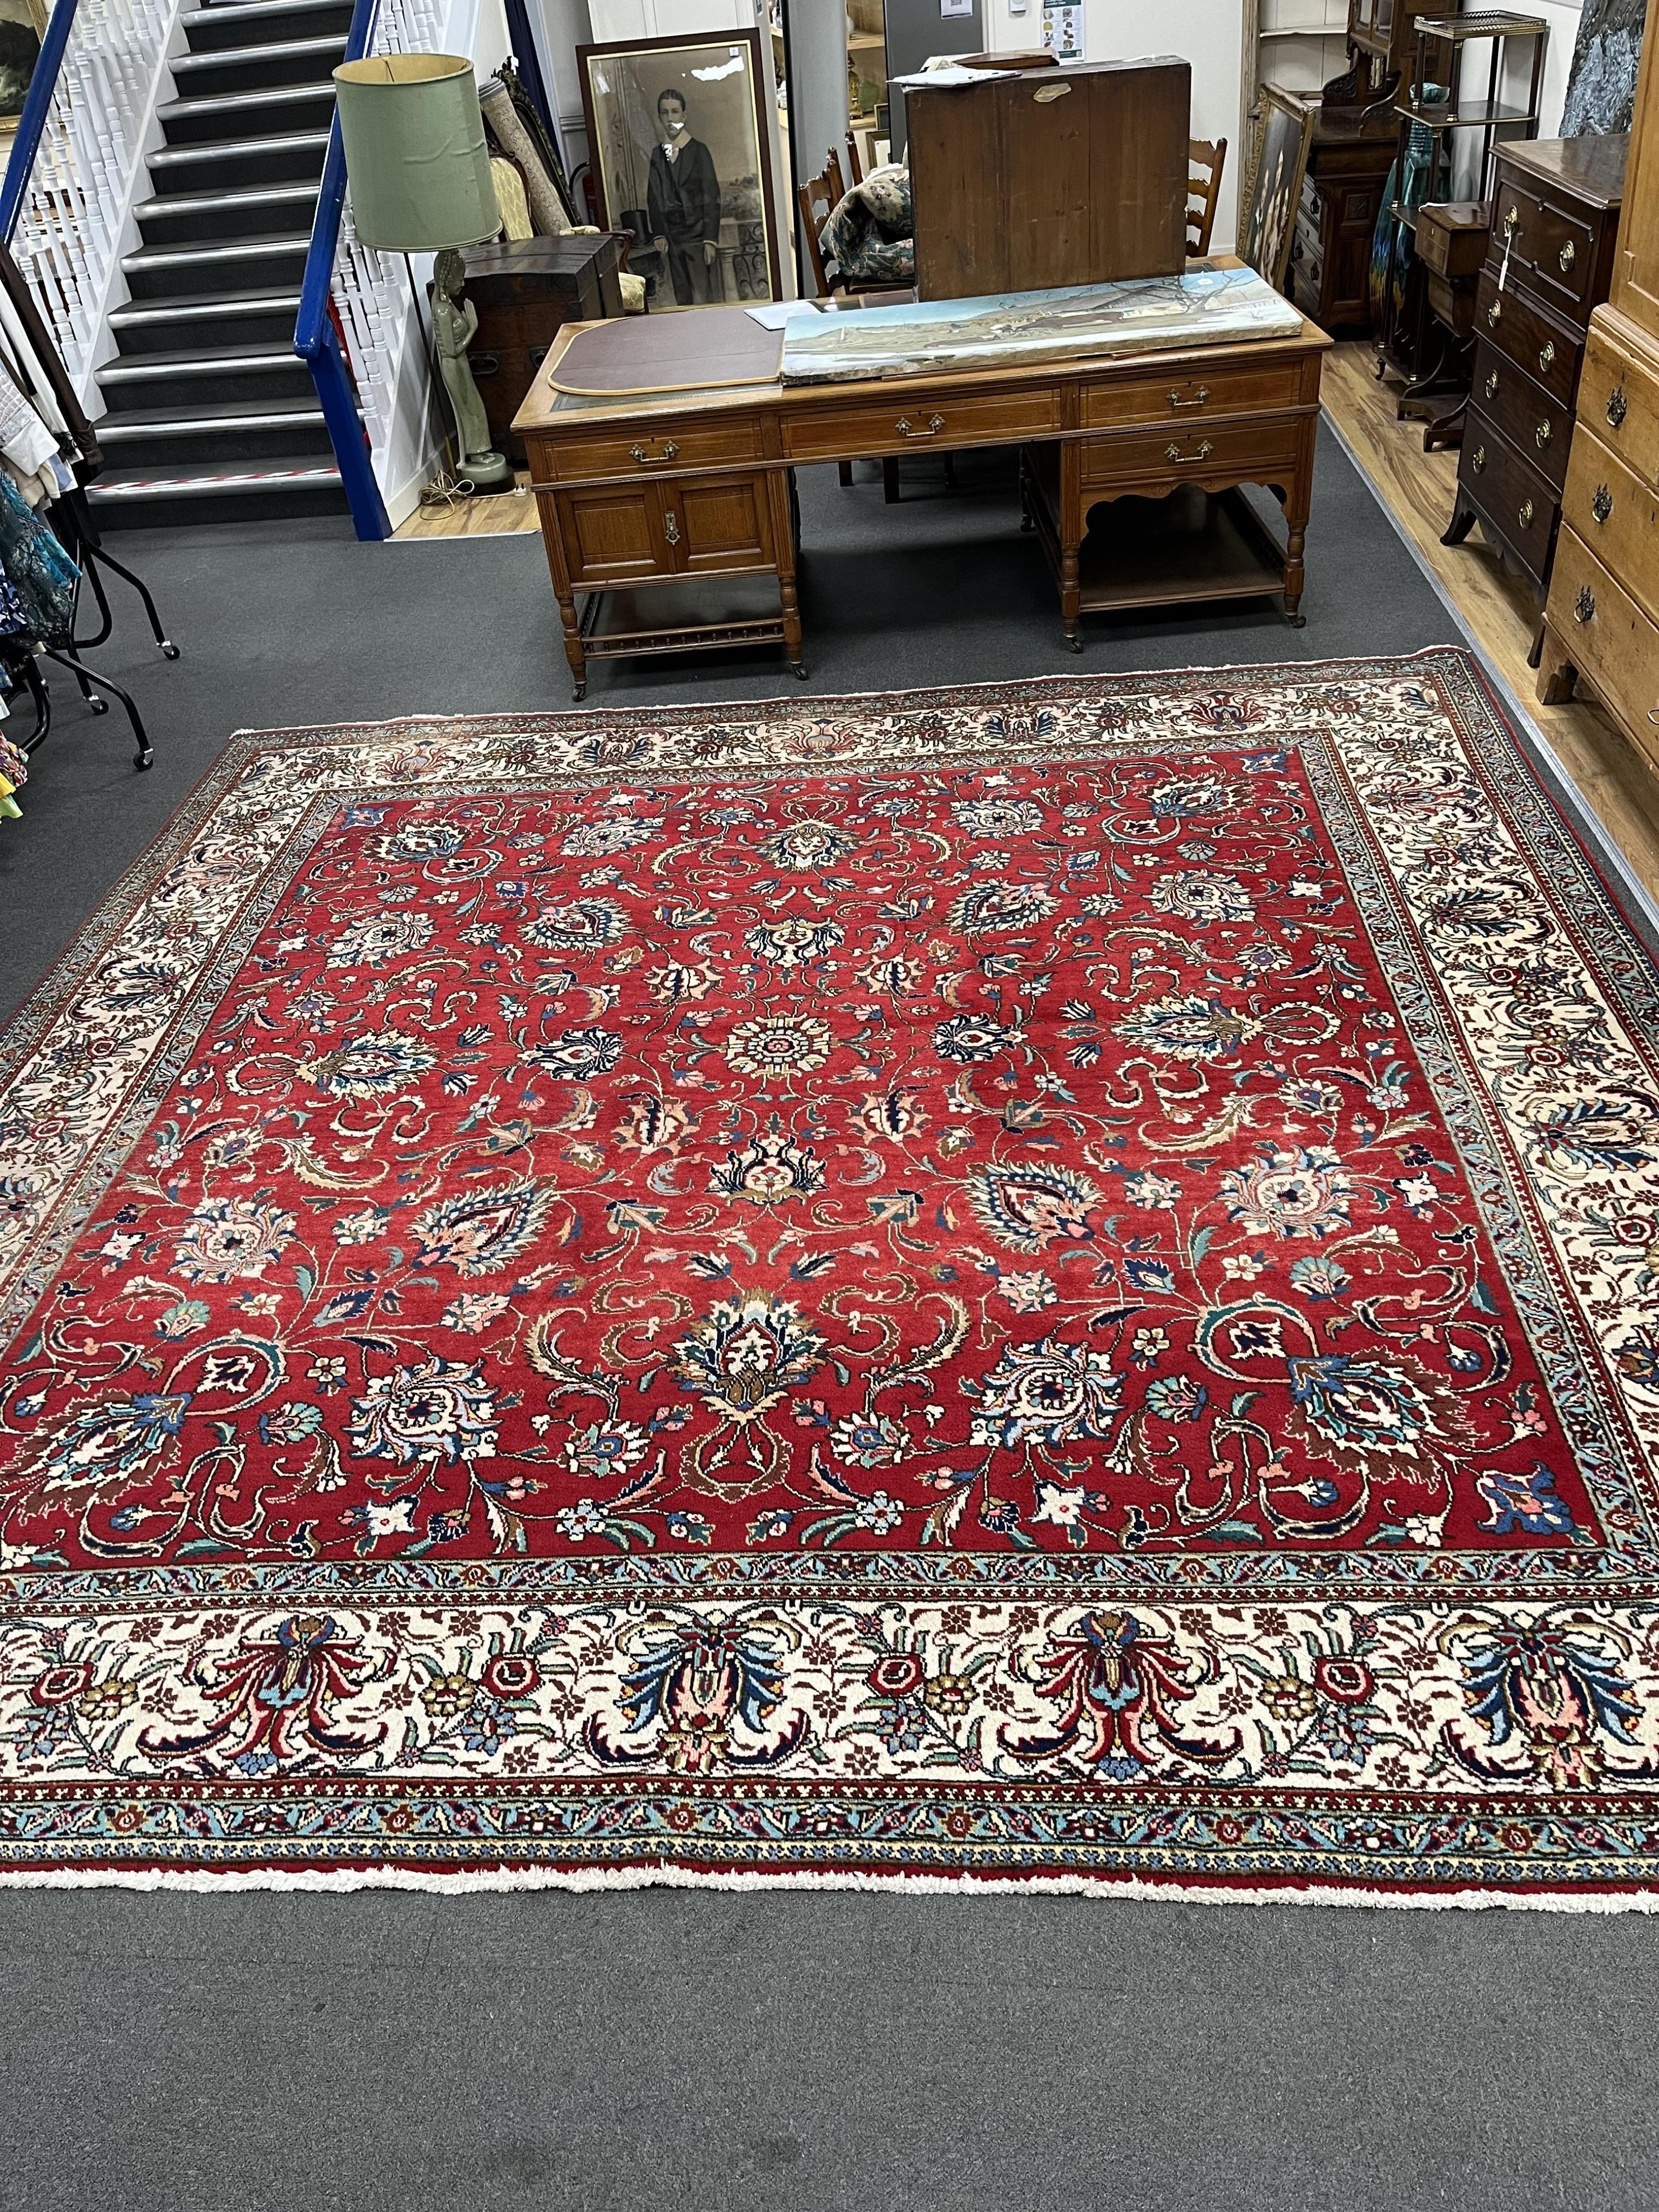 A Persian red ground carpet, worn, 340 x 340cm. Condition - fair